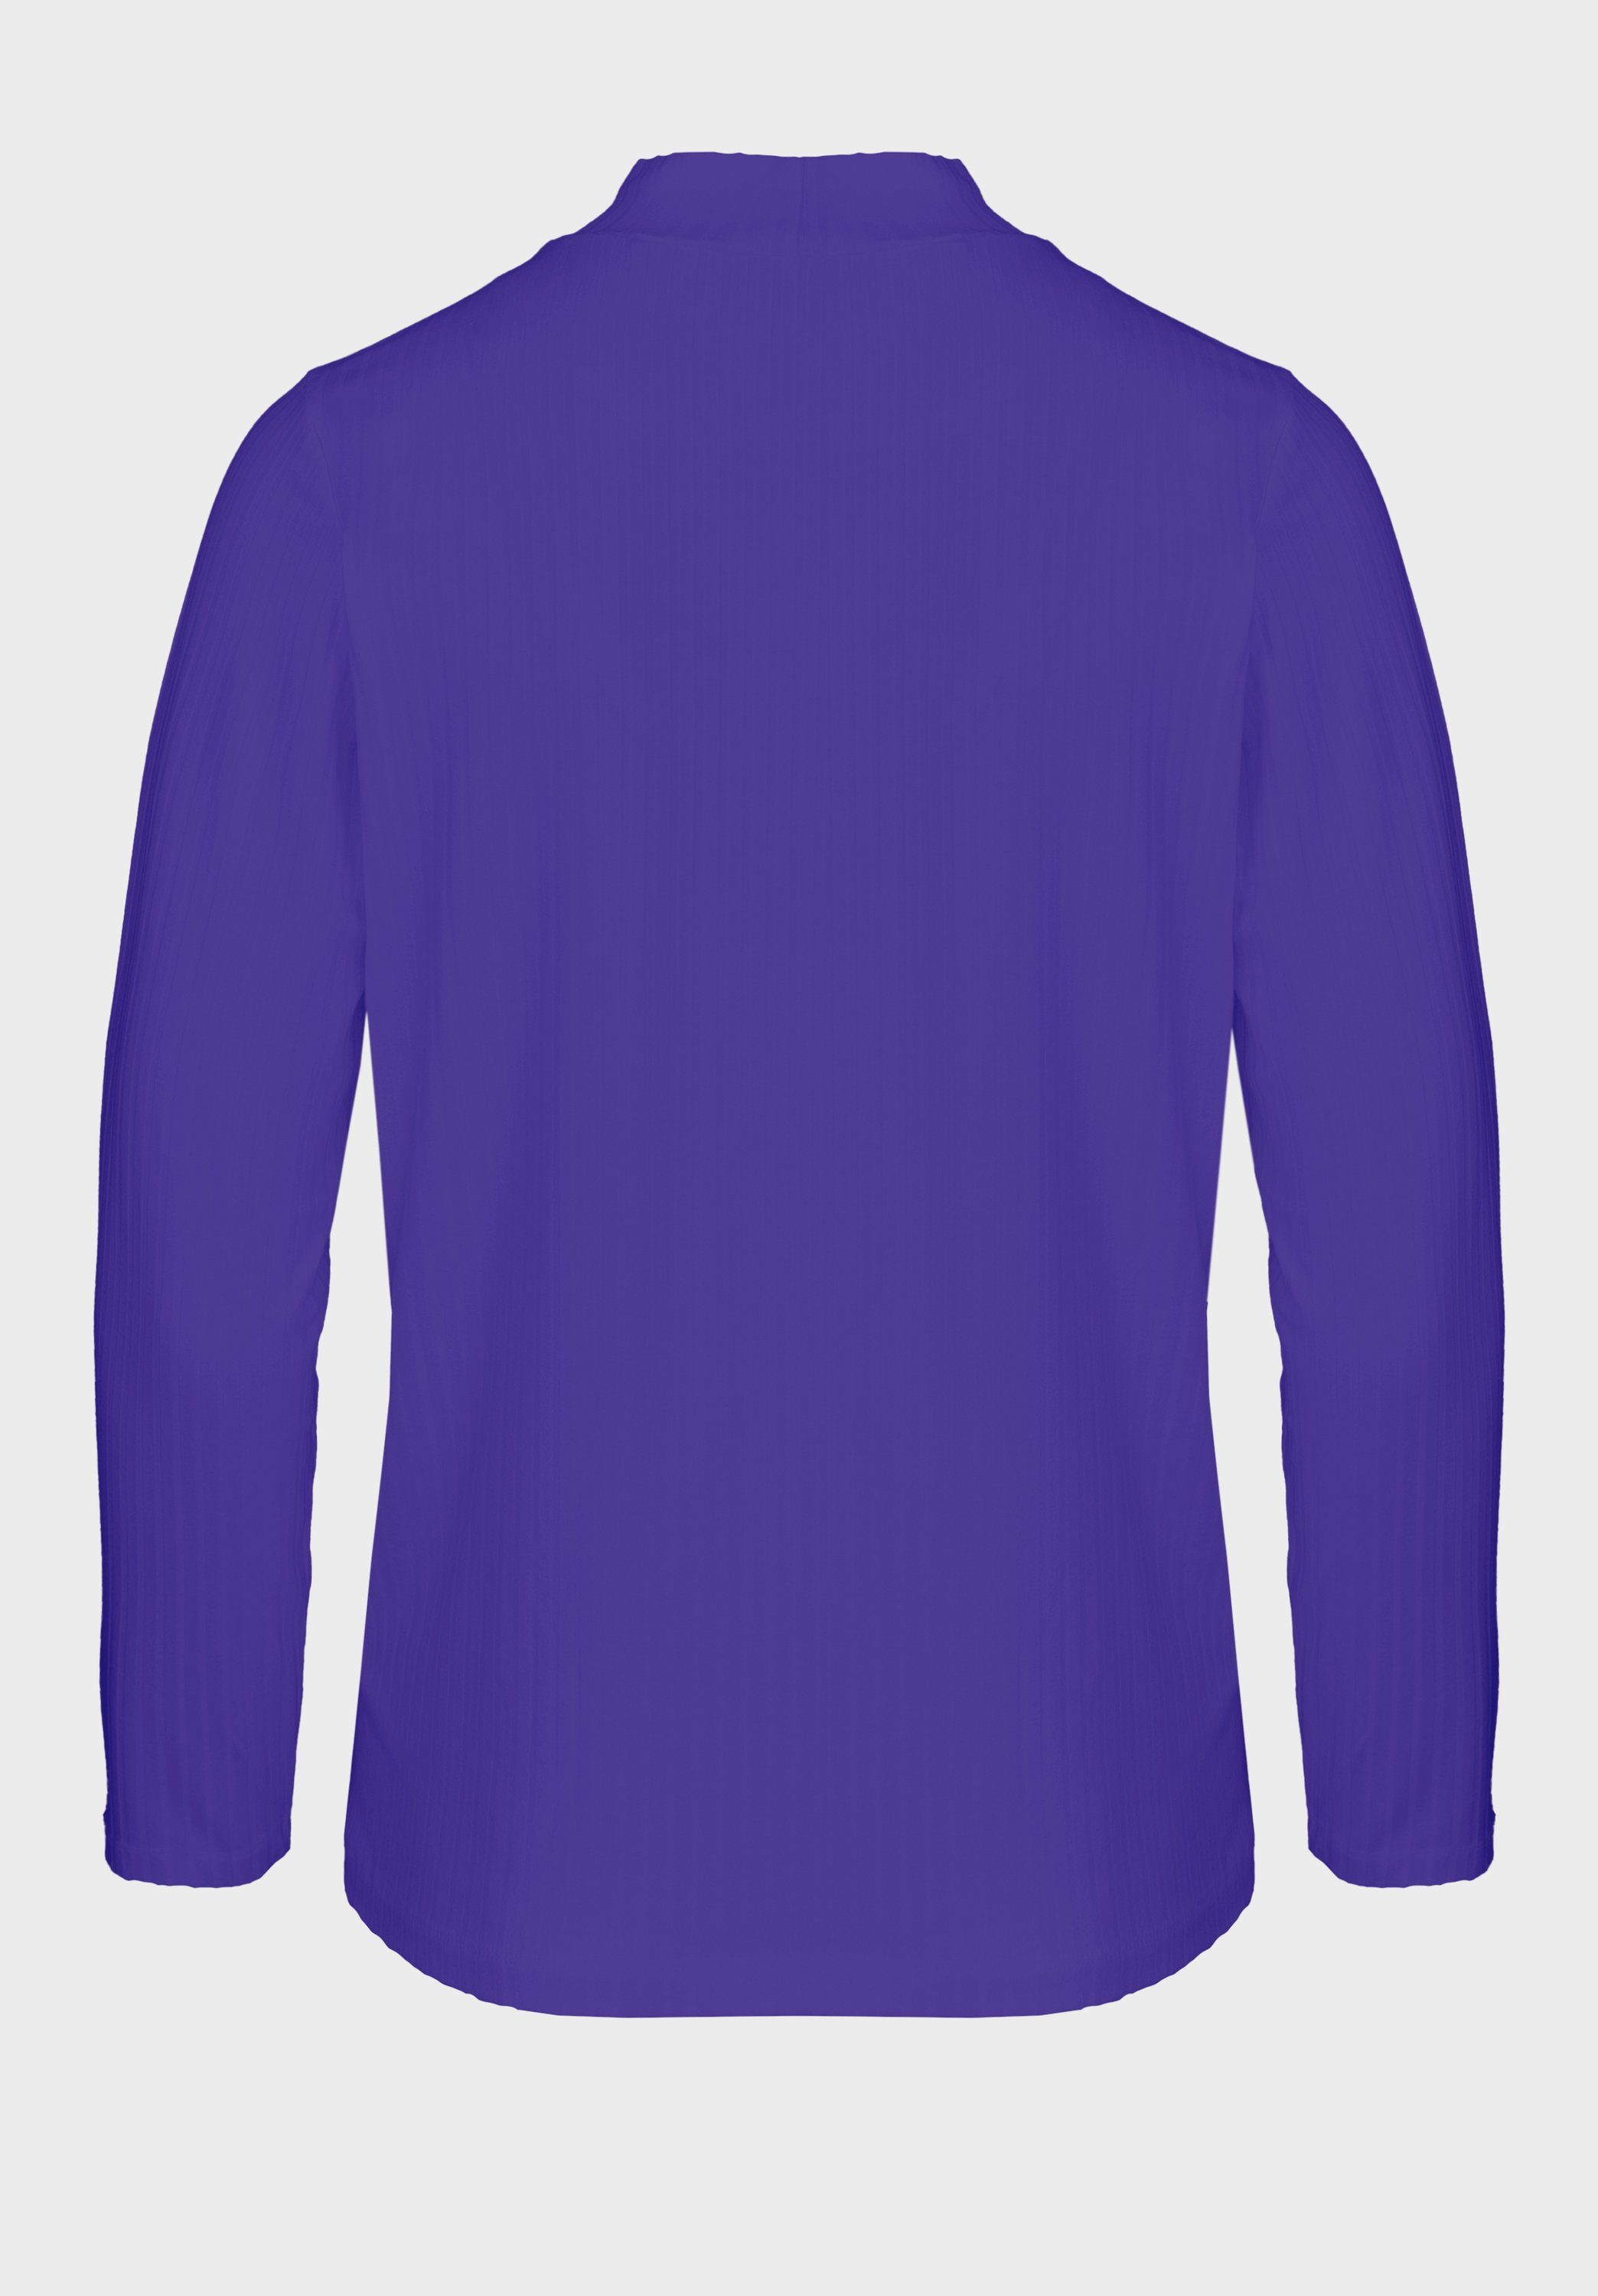 bianca Langarmshirt GRETA in Trendfarben modernem mit purple Turtle-Neck coolen